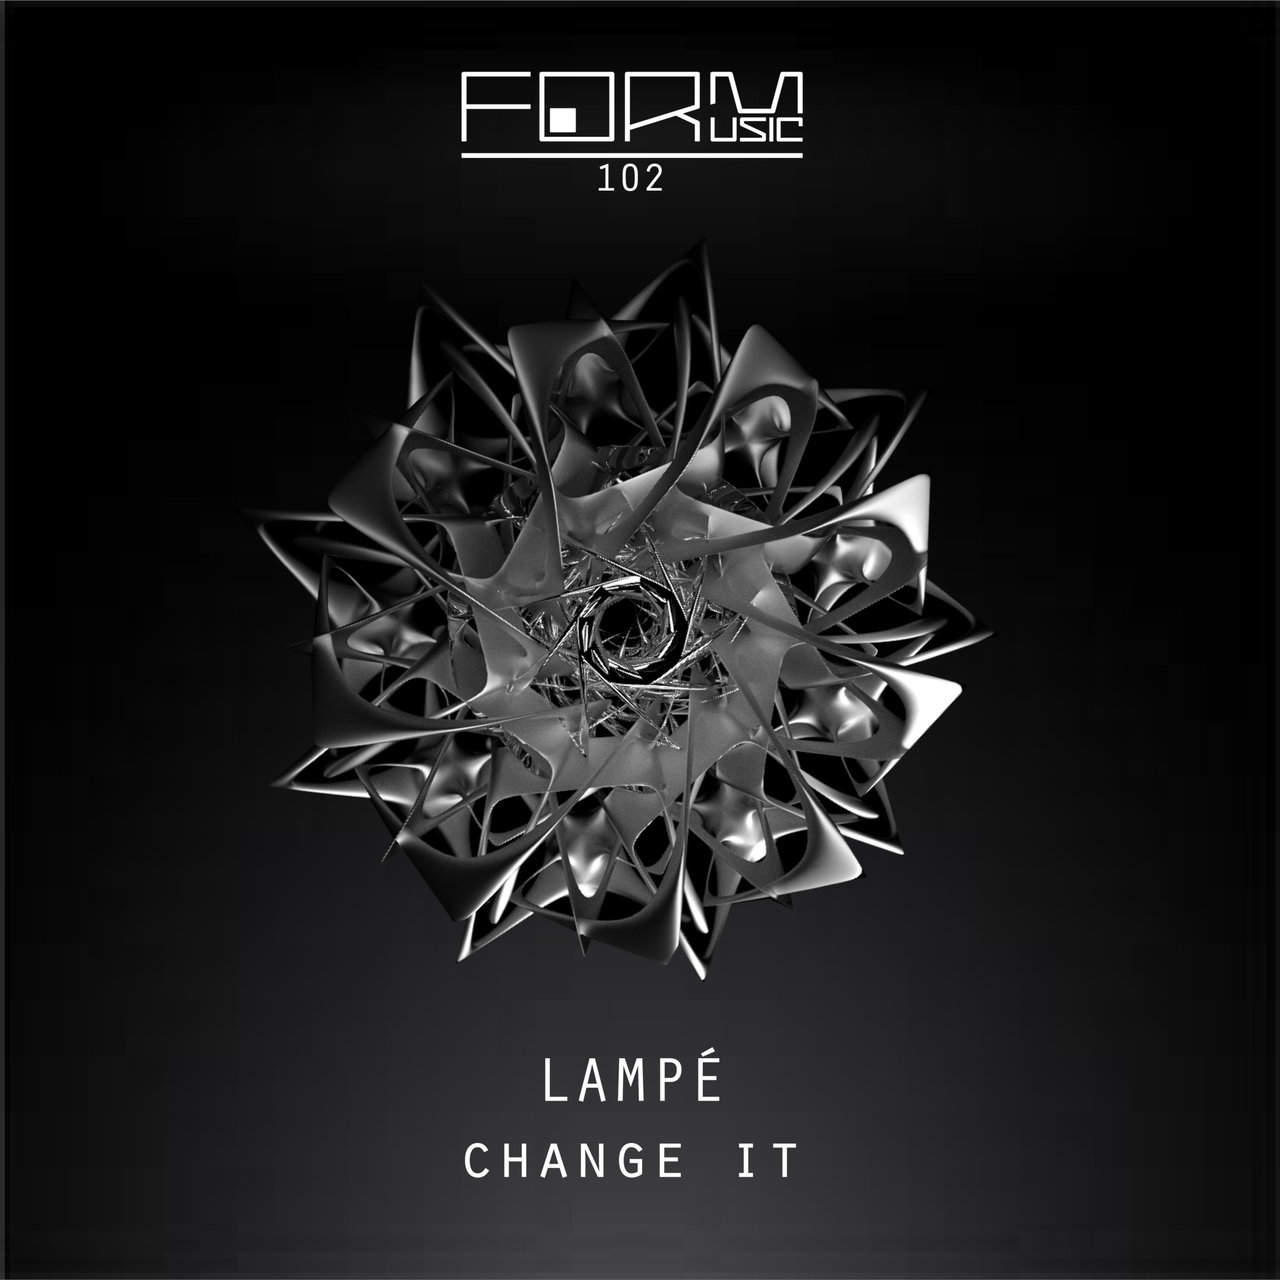 Download Lampé - Change It on Electrobuzz